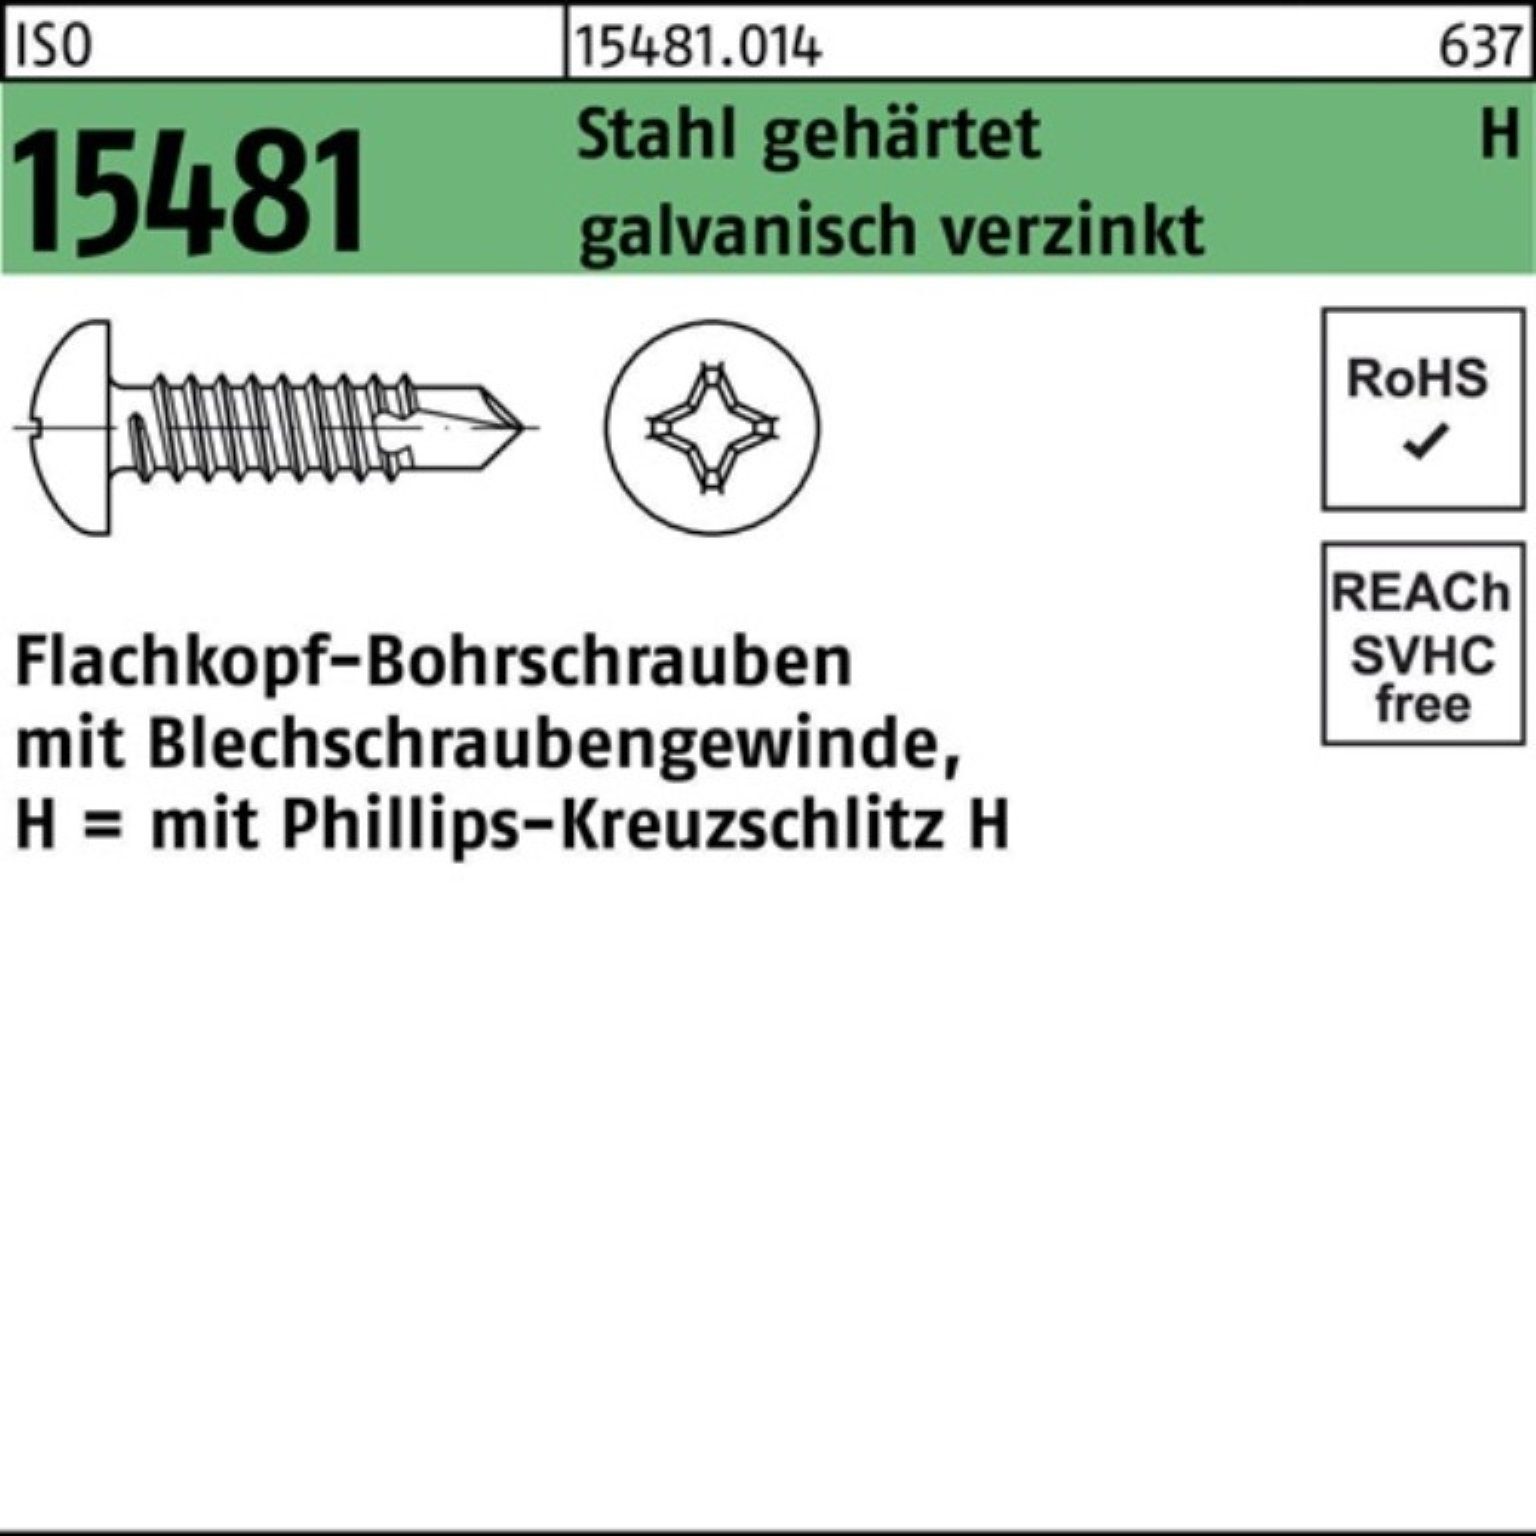 Bohrschraube Stahl gehärtet Reyher FLAKObohrschraube Pack 500er 15481 PH ST ISO 3,9x38-H